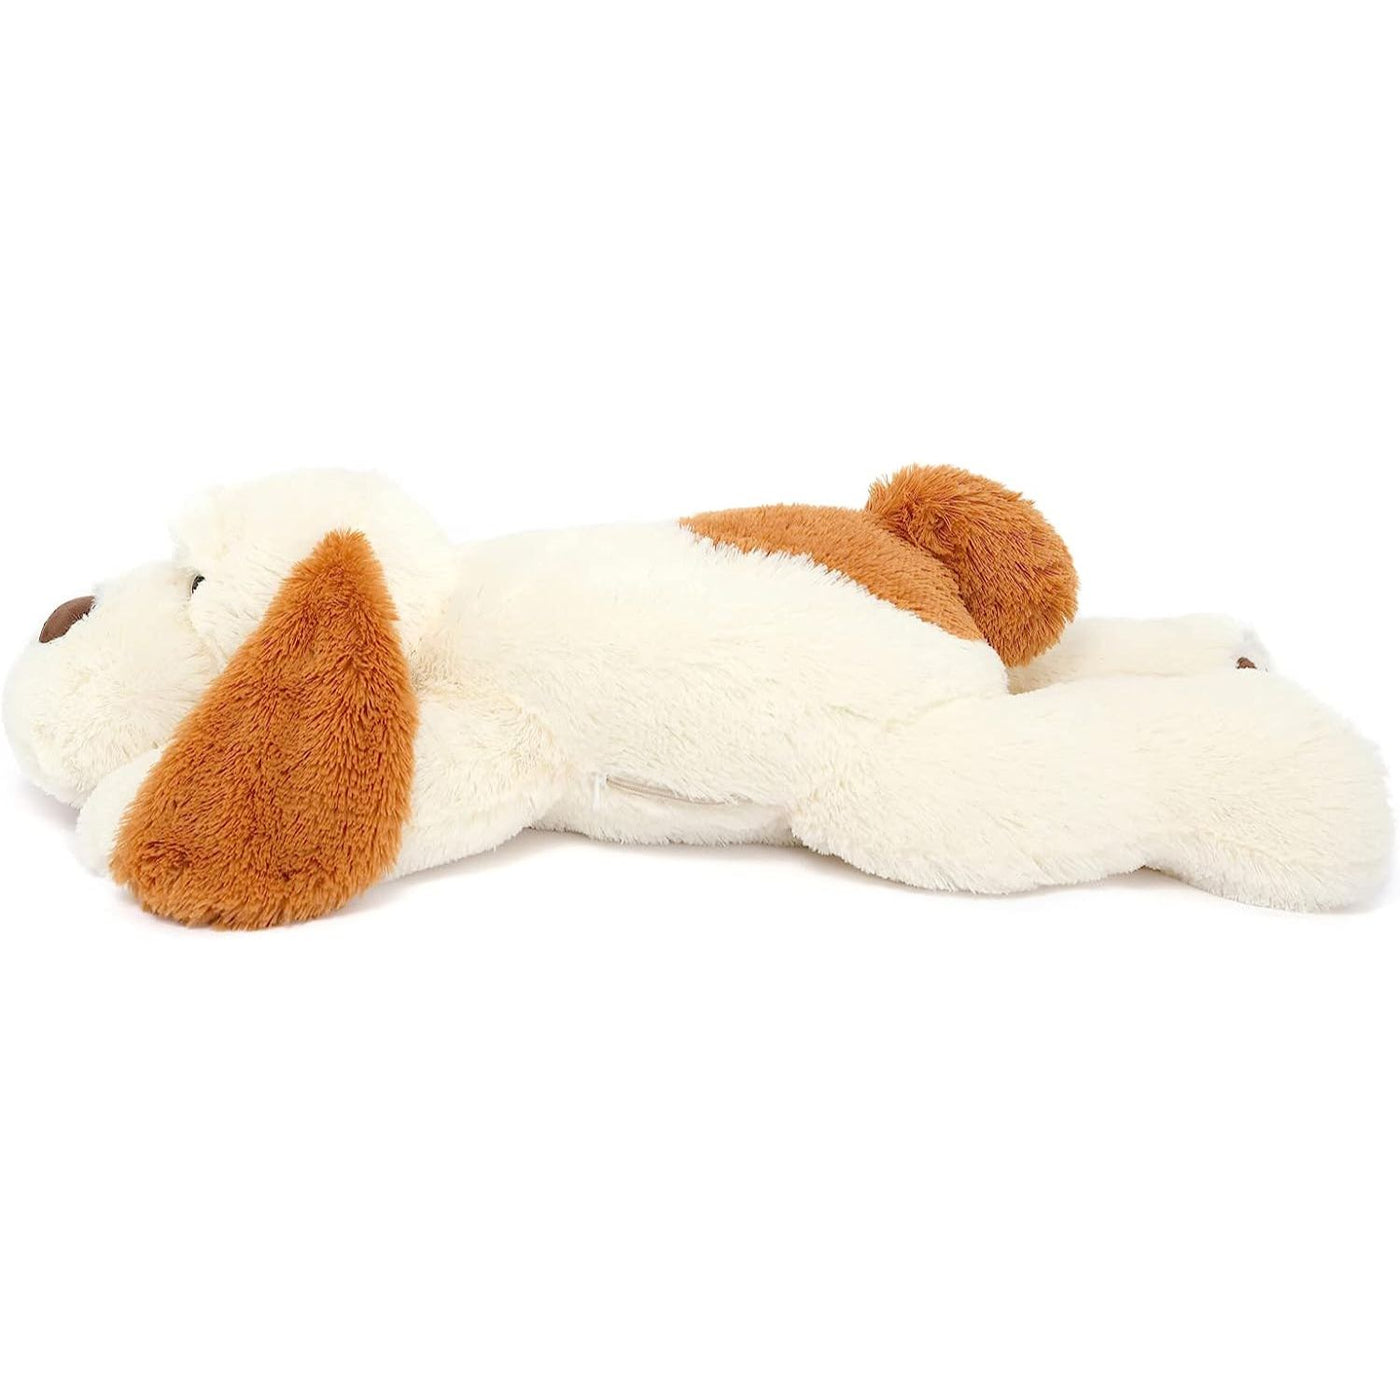 Beagle Teddy Soft Toy Pillow Plush